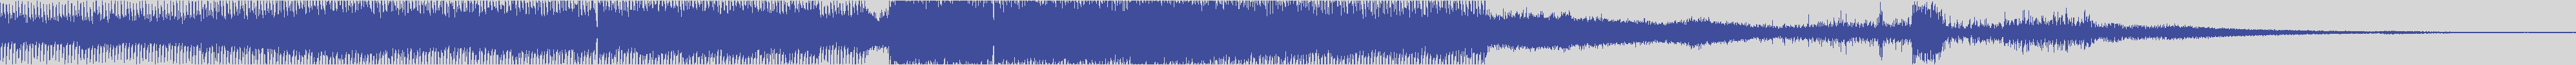 upr [UPRGOLD01] Blind Delon - Rule 6 [Original Mix] audio wave form